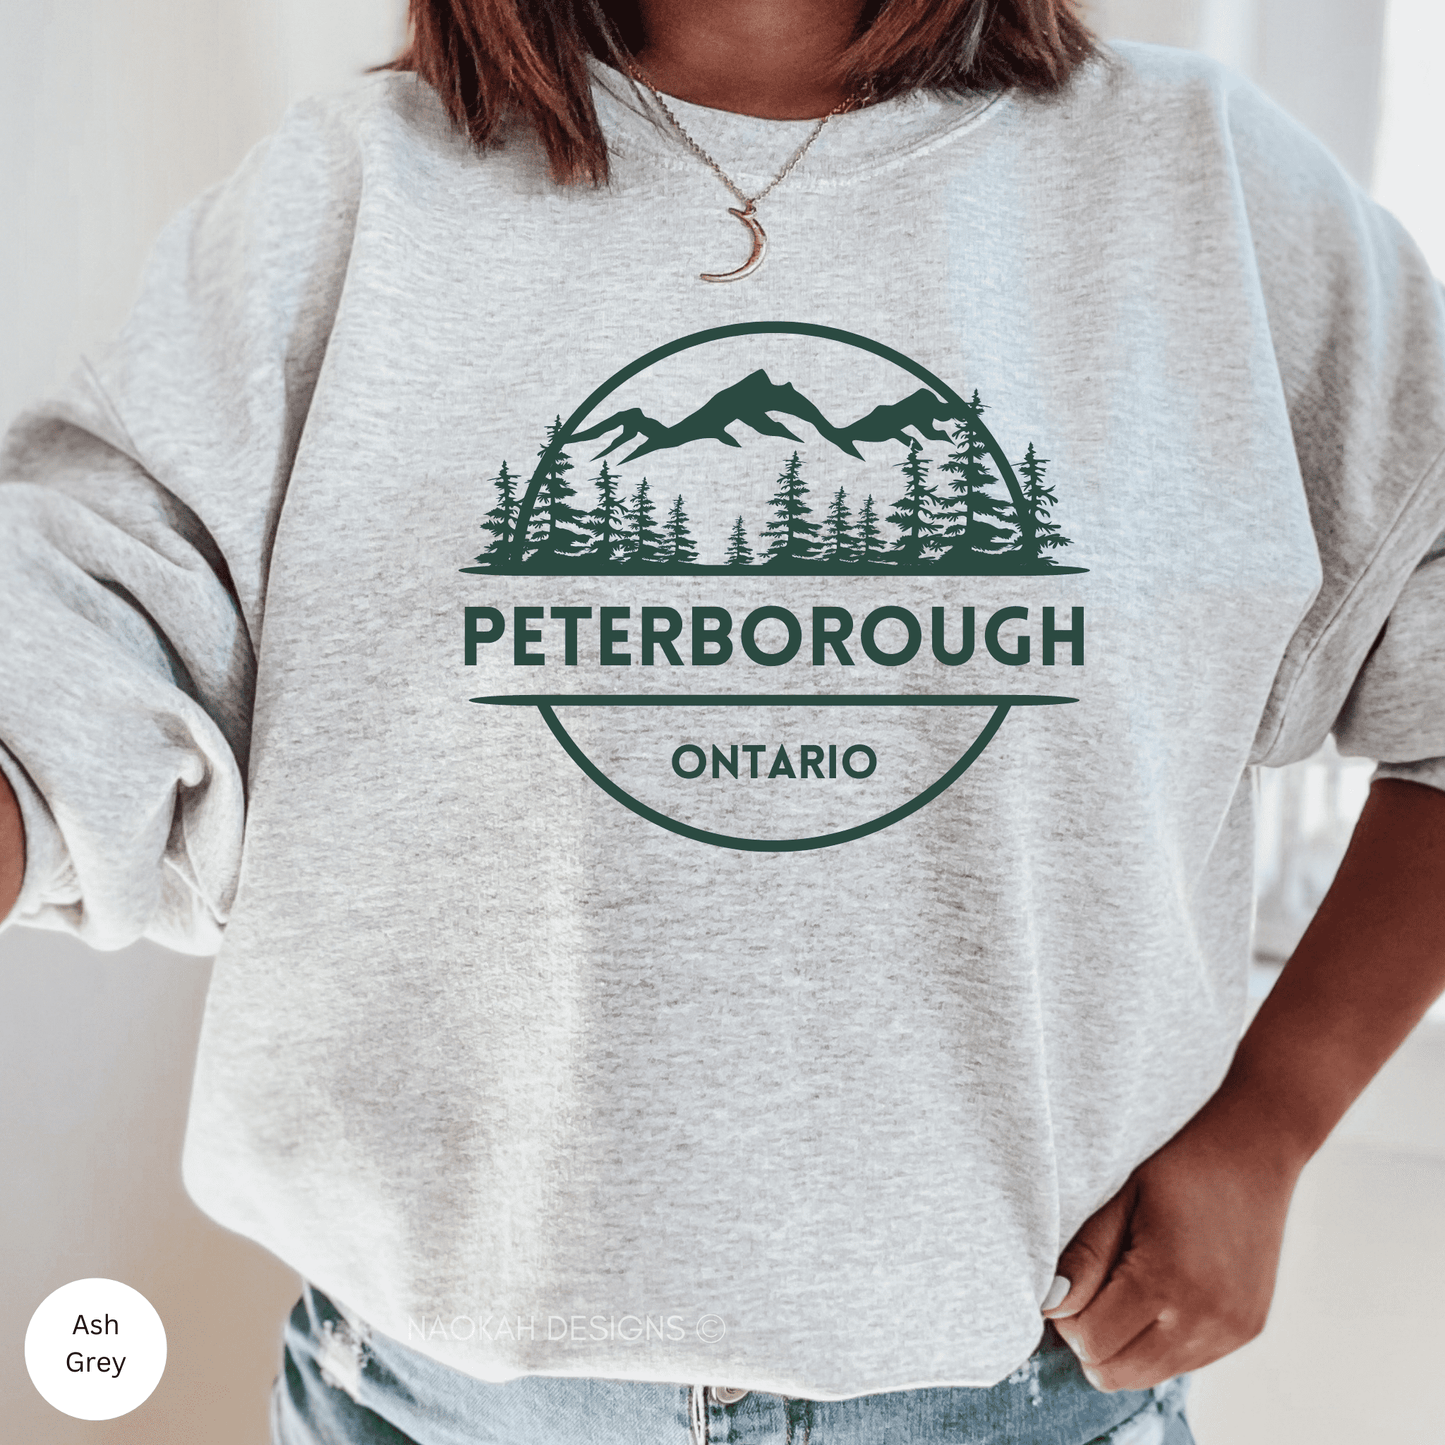 peterborough Ontario crewneck sweater, Kawartha's shirt, Ontario shirt, Peterborough shirt, Kawartha lakes, trent, nature shirt, outdoor shirt, landscape shirt, cottage country shirt